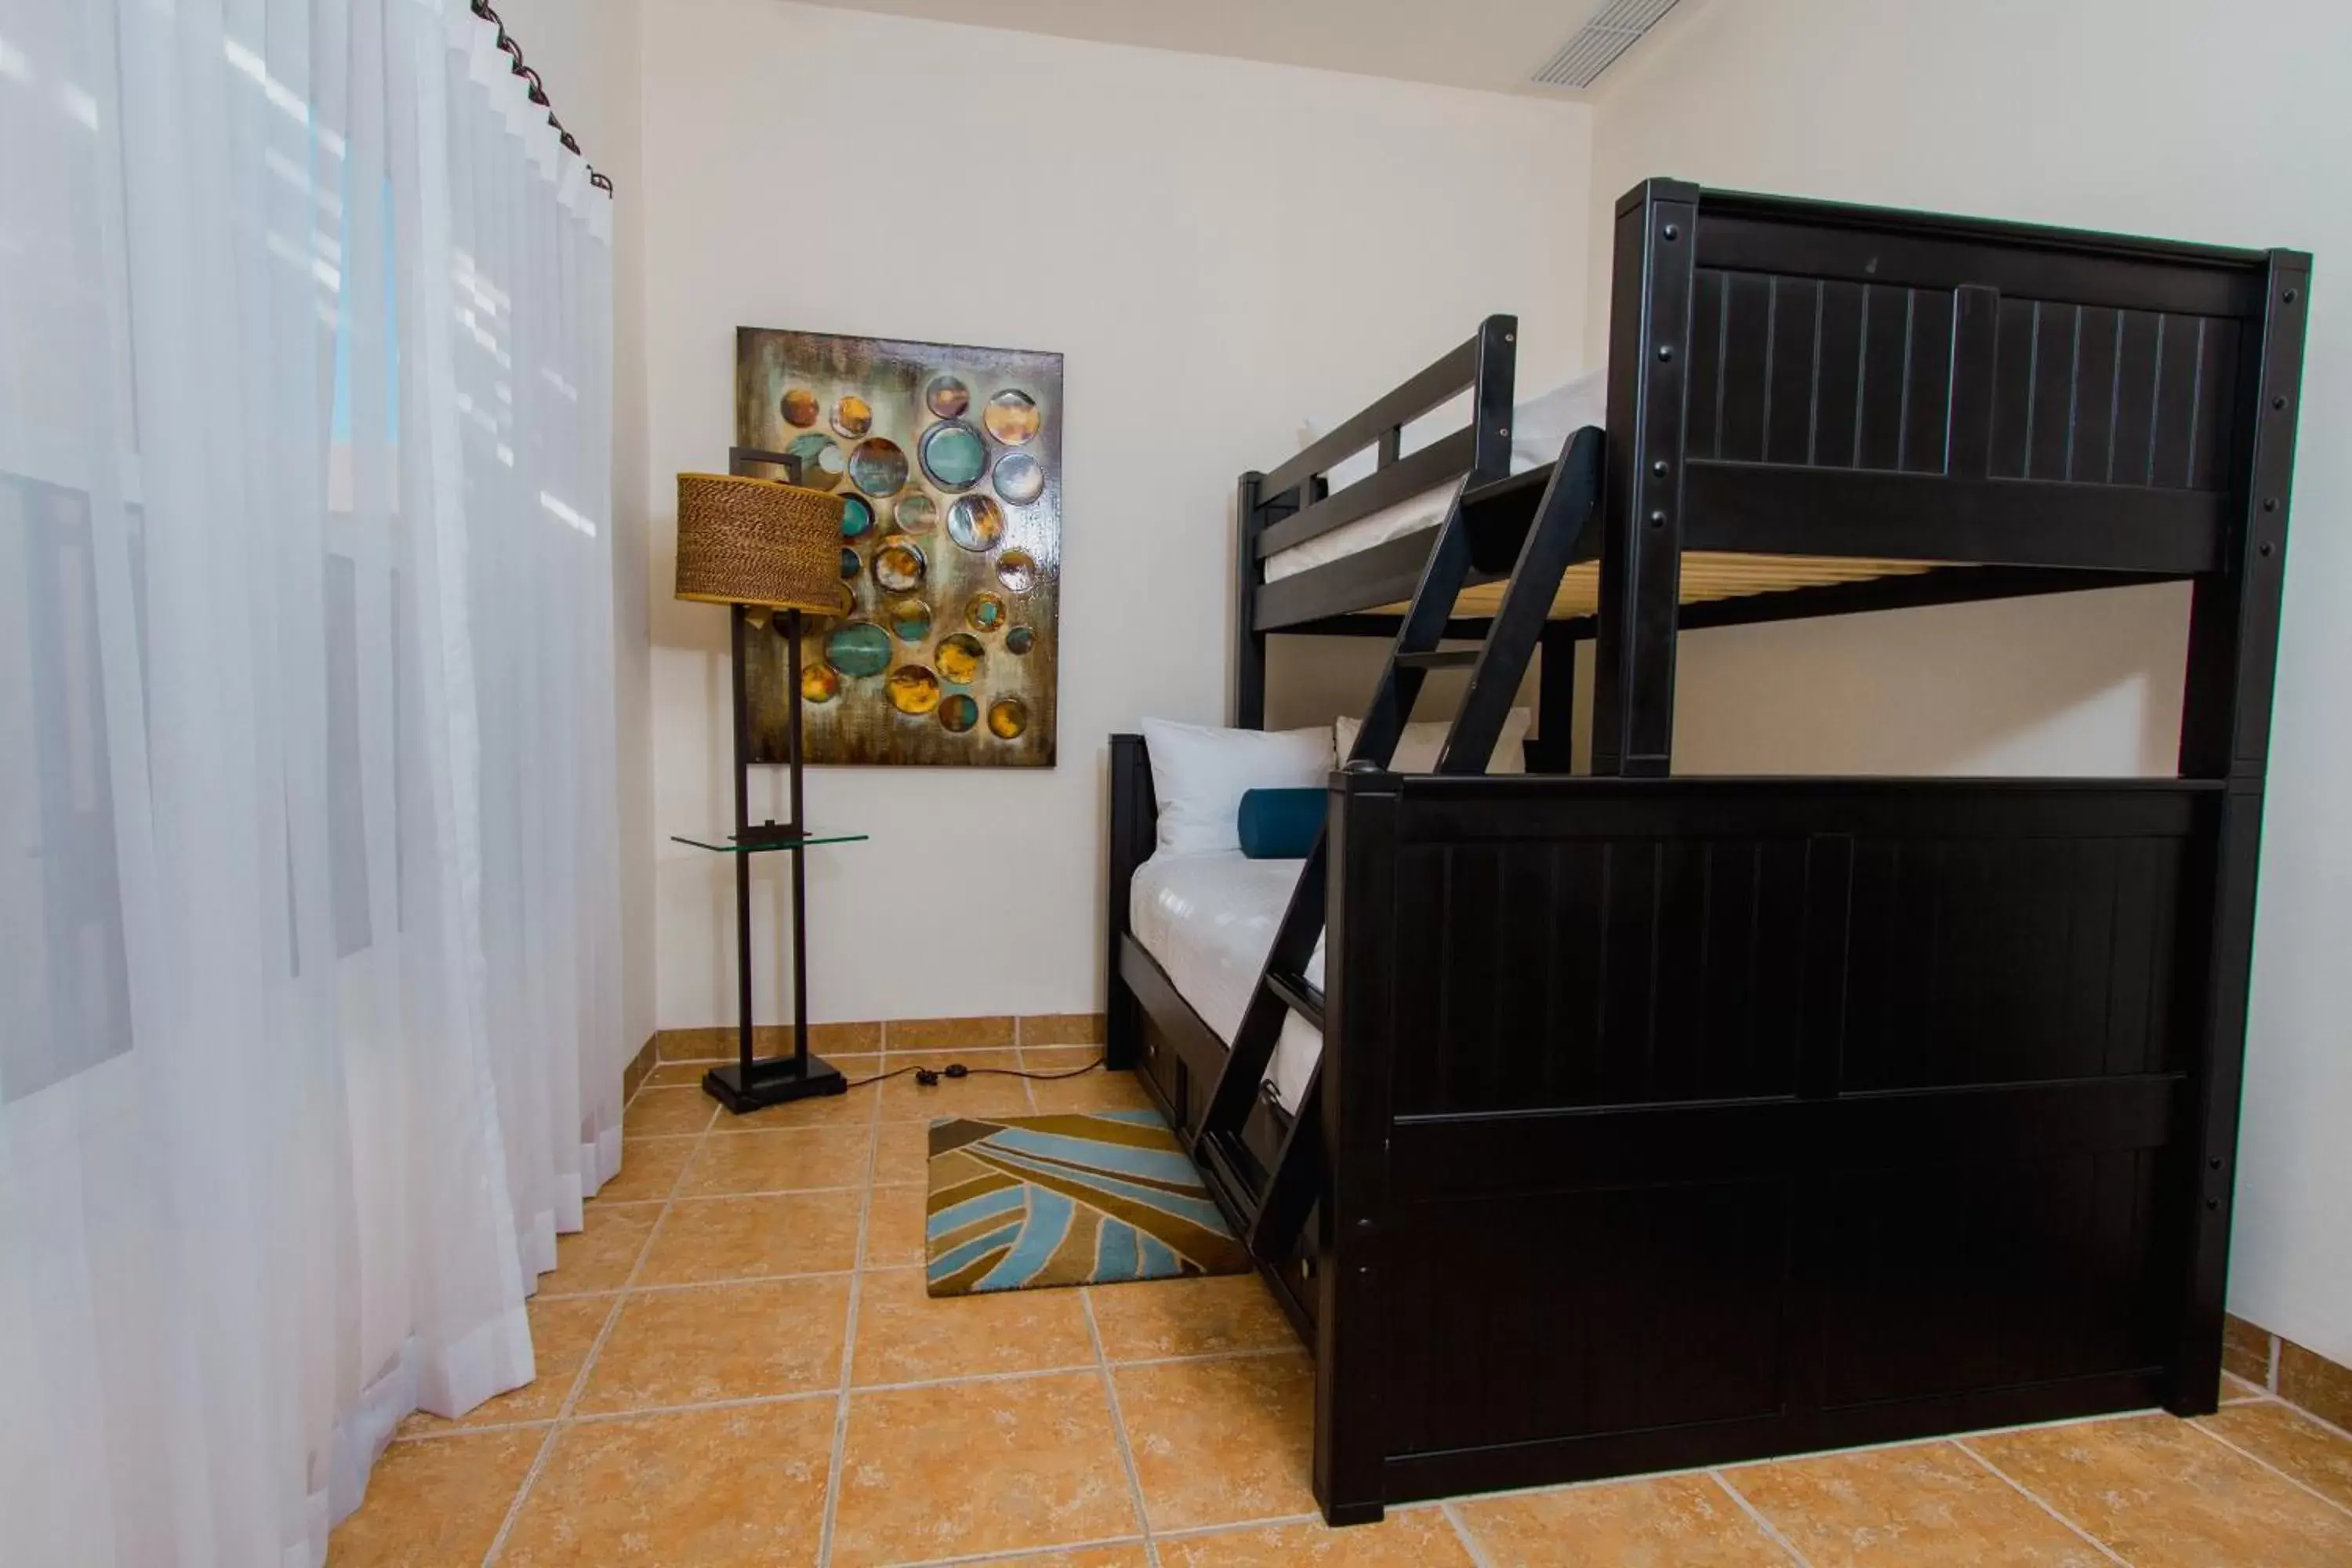 Bedroom, Bunk Bed in Puerta Cortes Residences